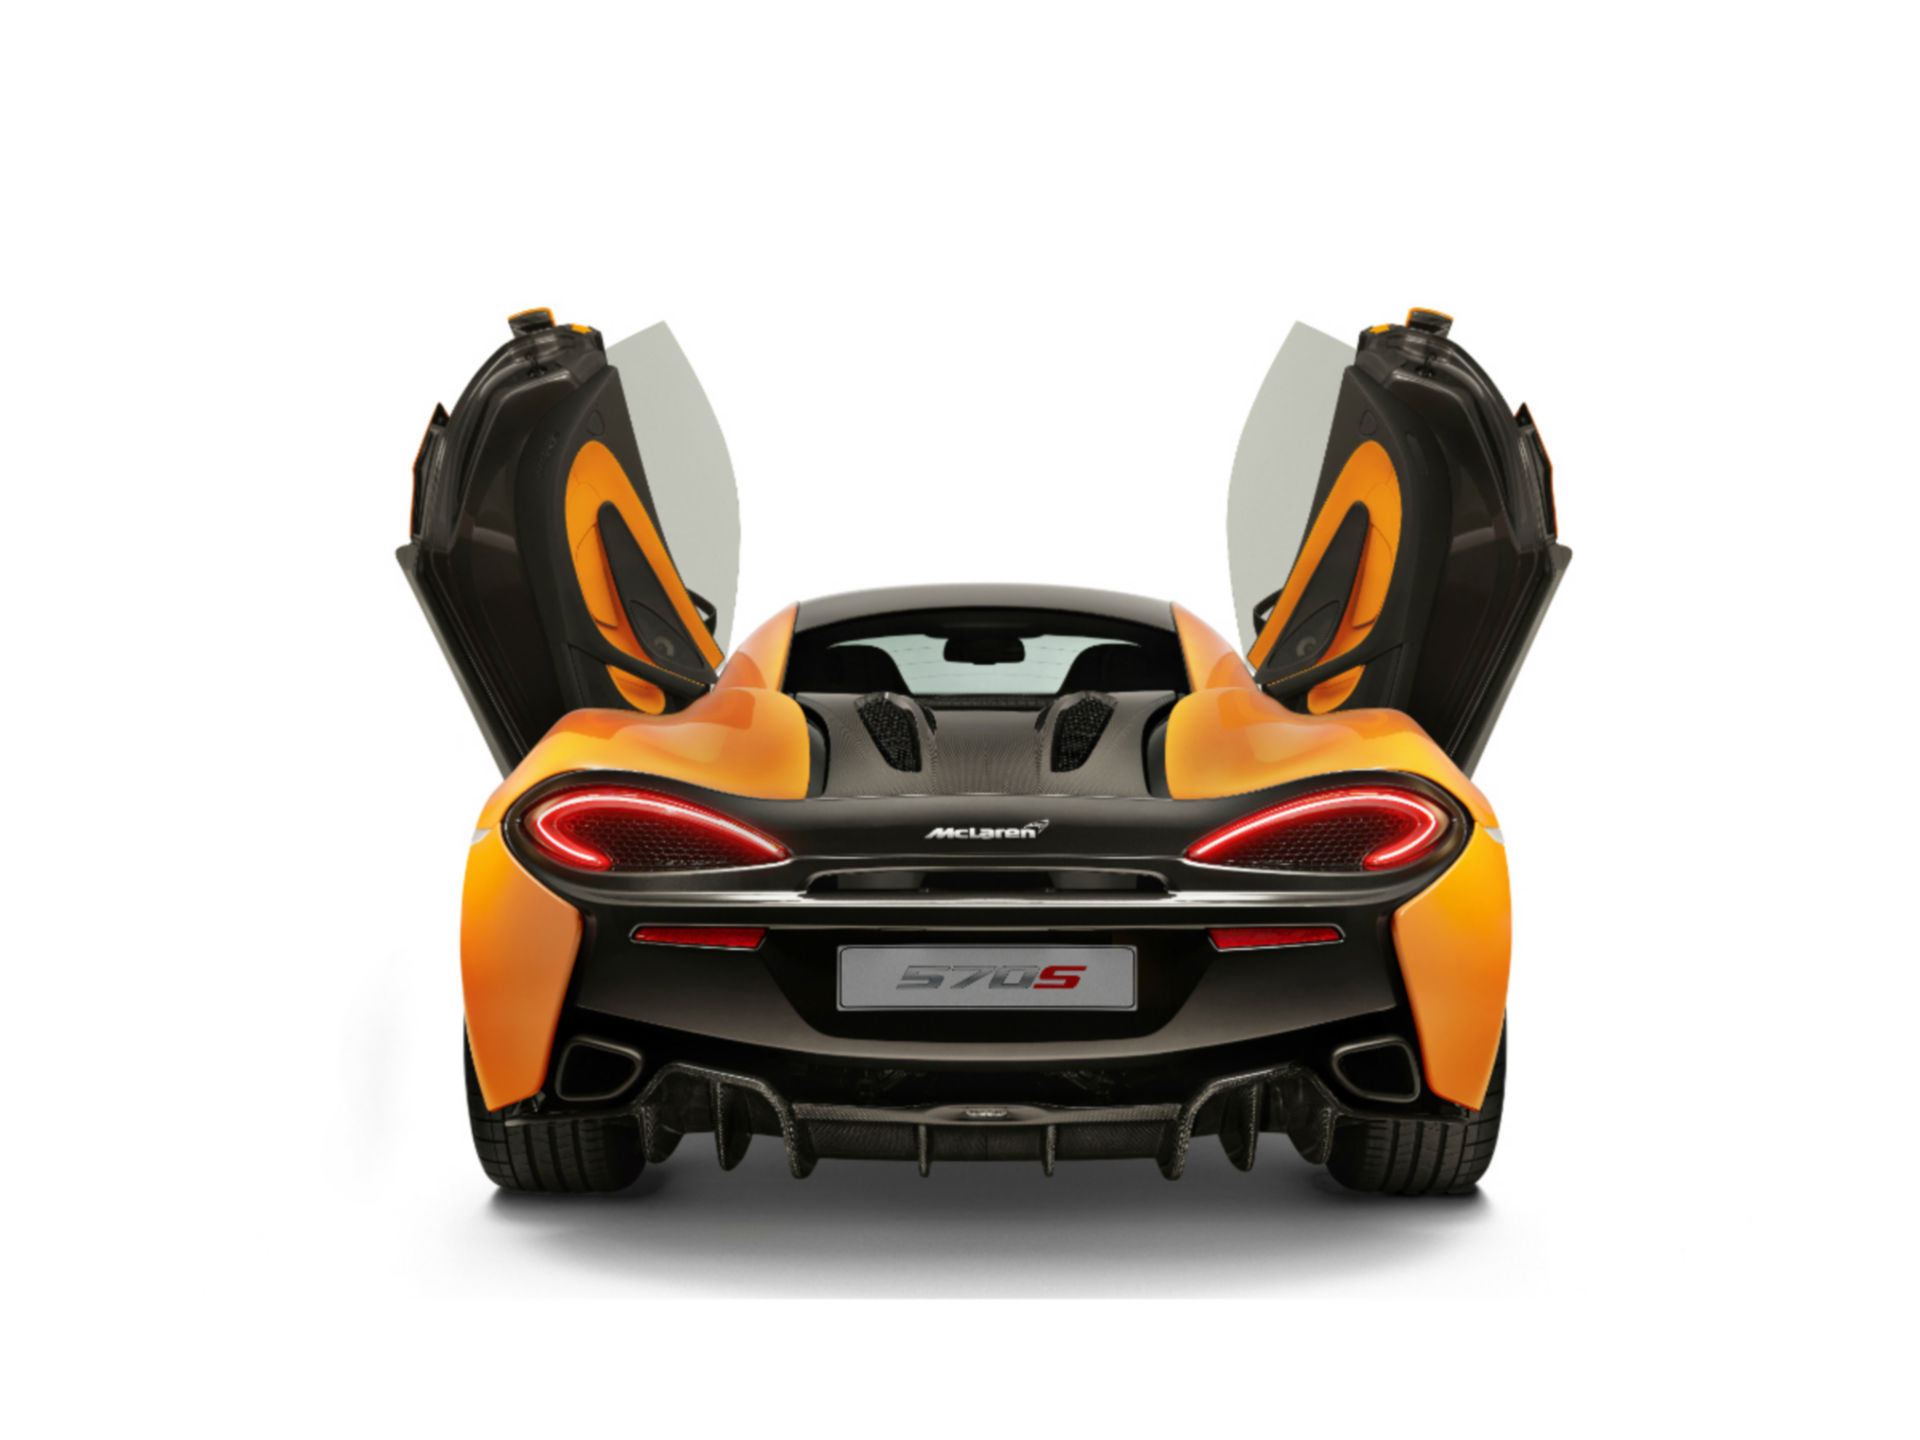 McLaren 570S Coupe